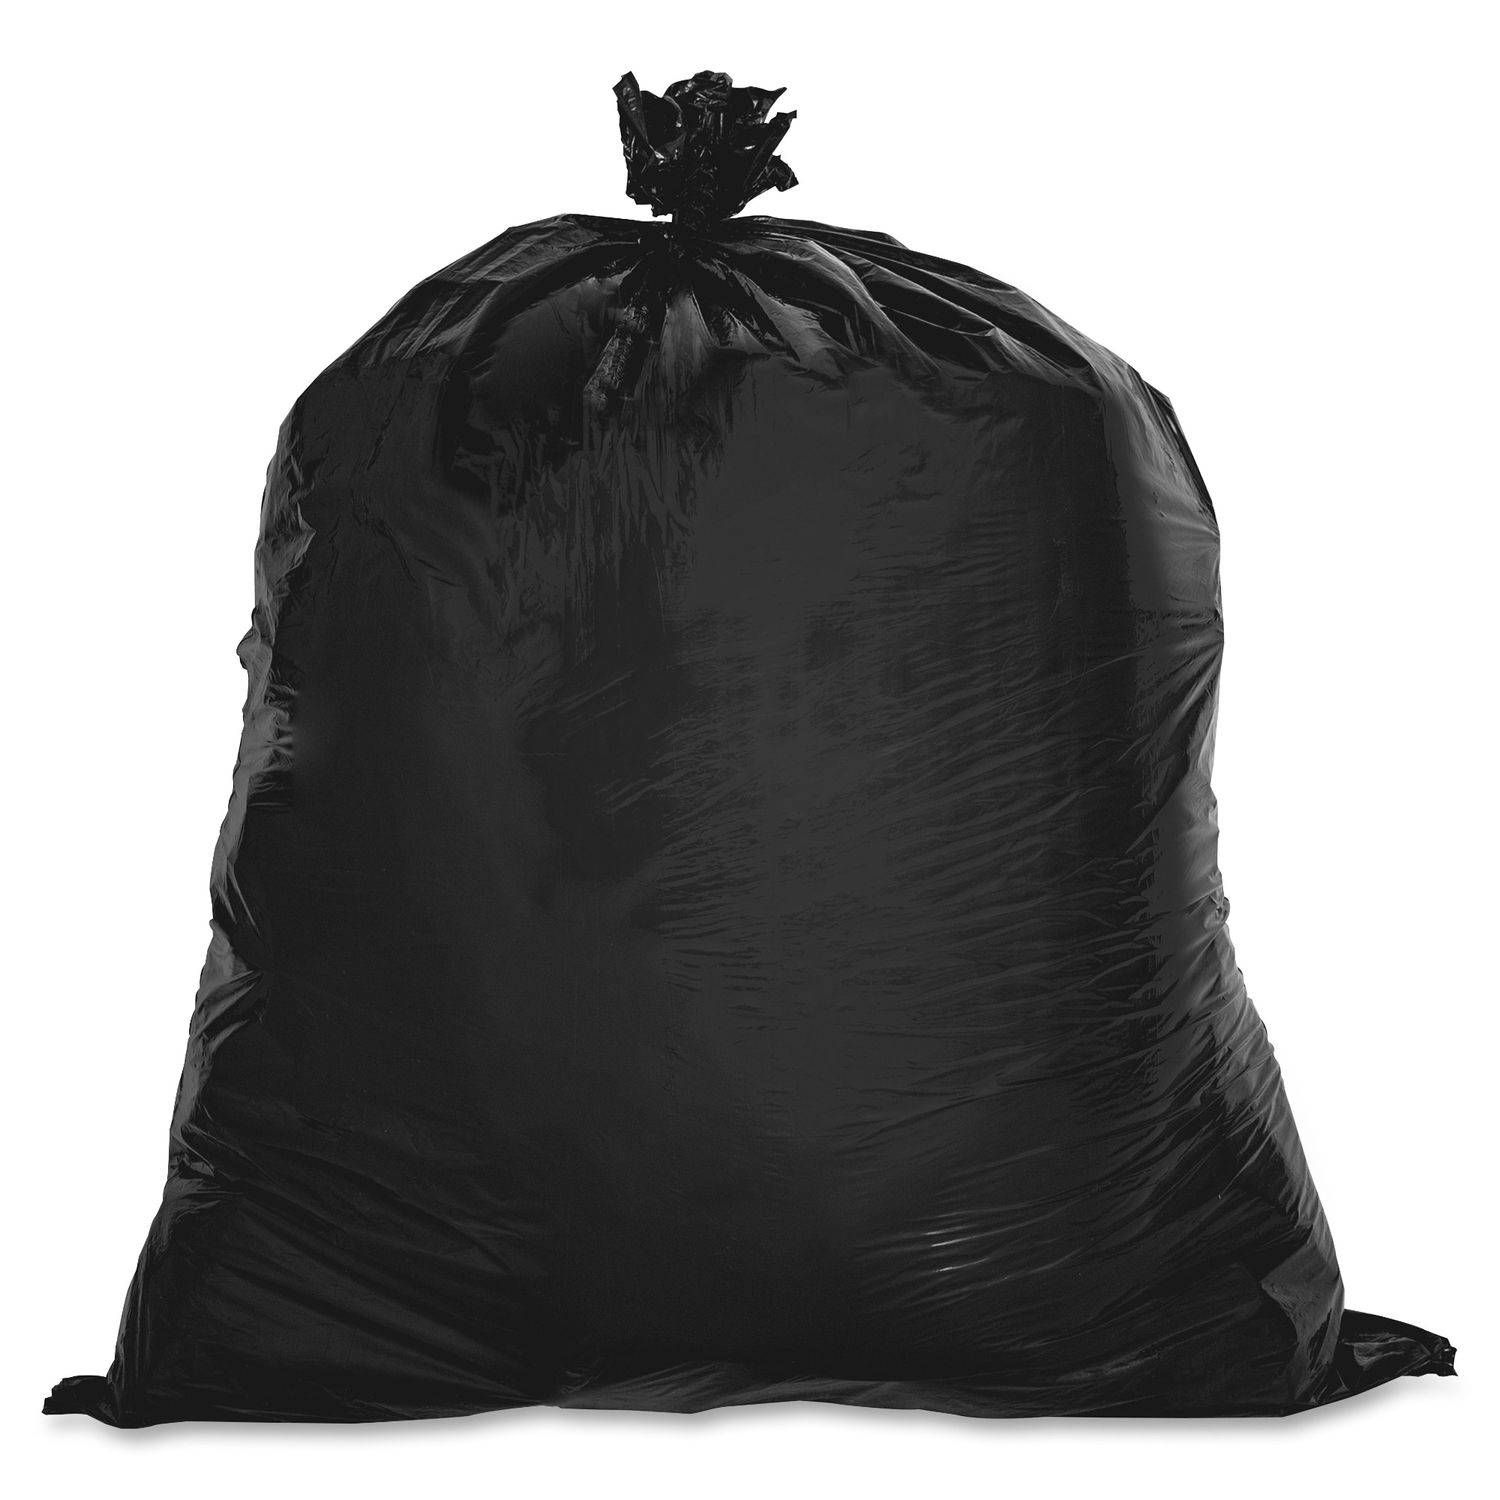 Trash Bags - 55-60 Gallon Black -1.5 mil - 38 x 58 - Qty. 100